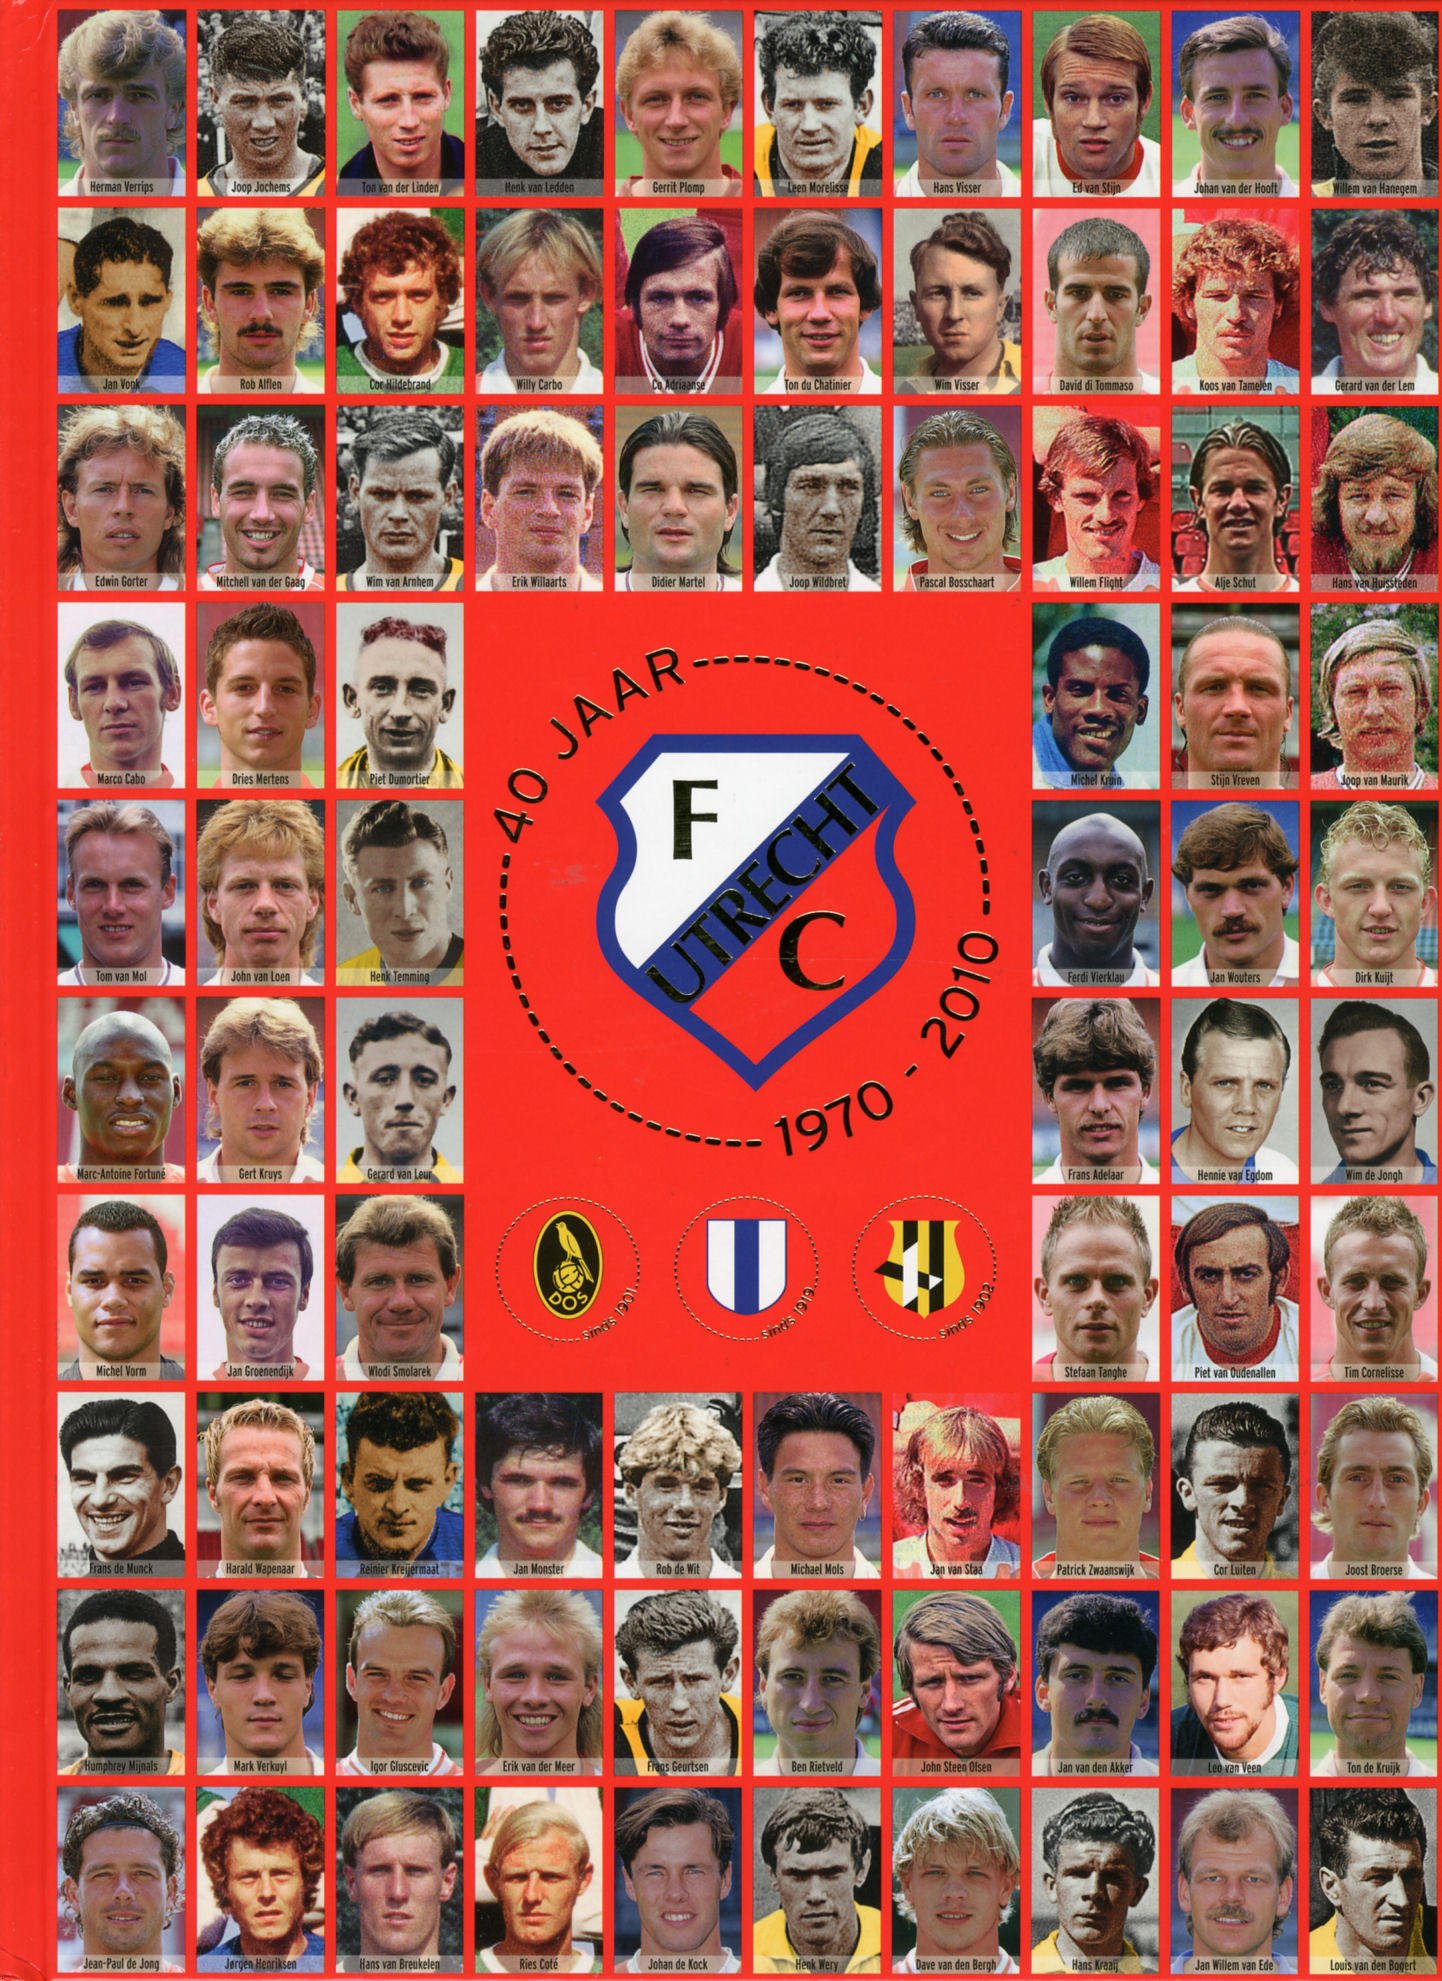 '40 jaar FC Utrecht' - Martin Donker & Ton de Ruiter